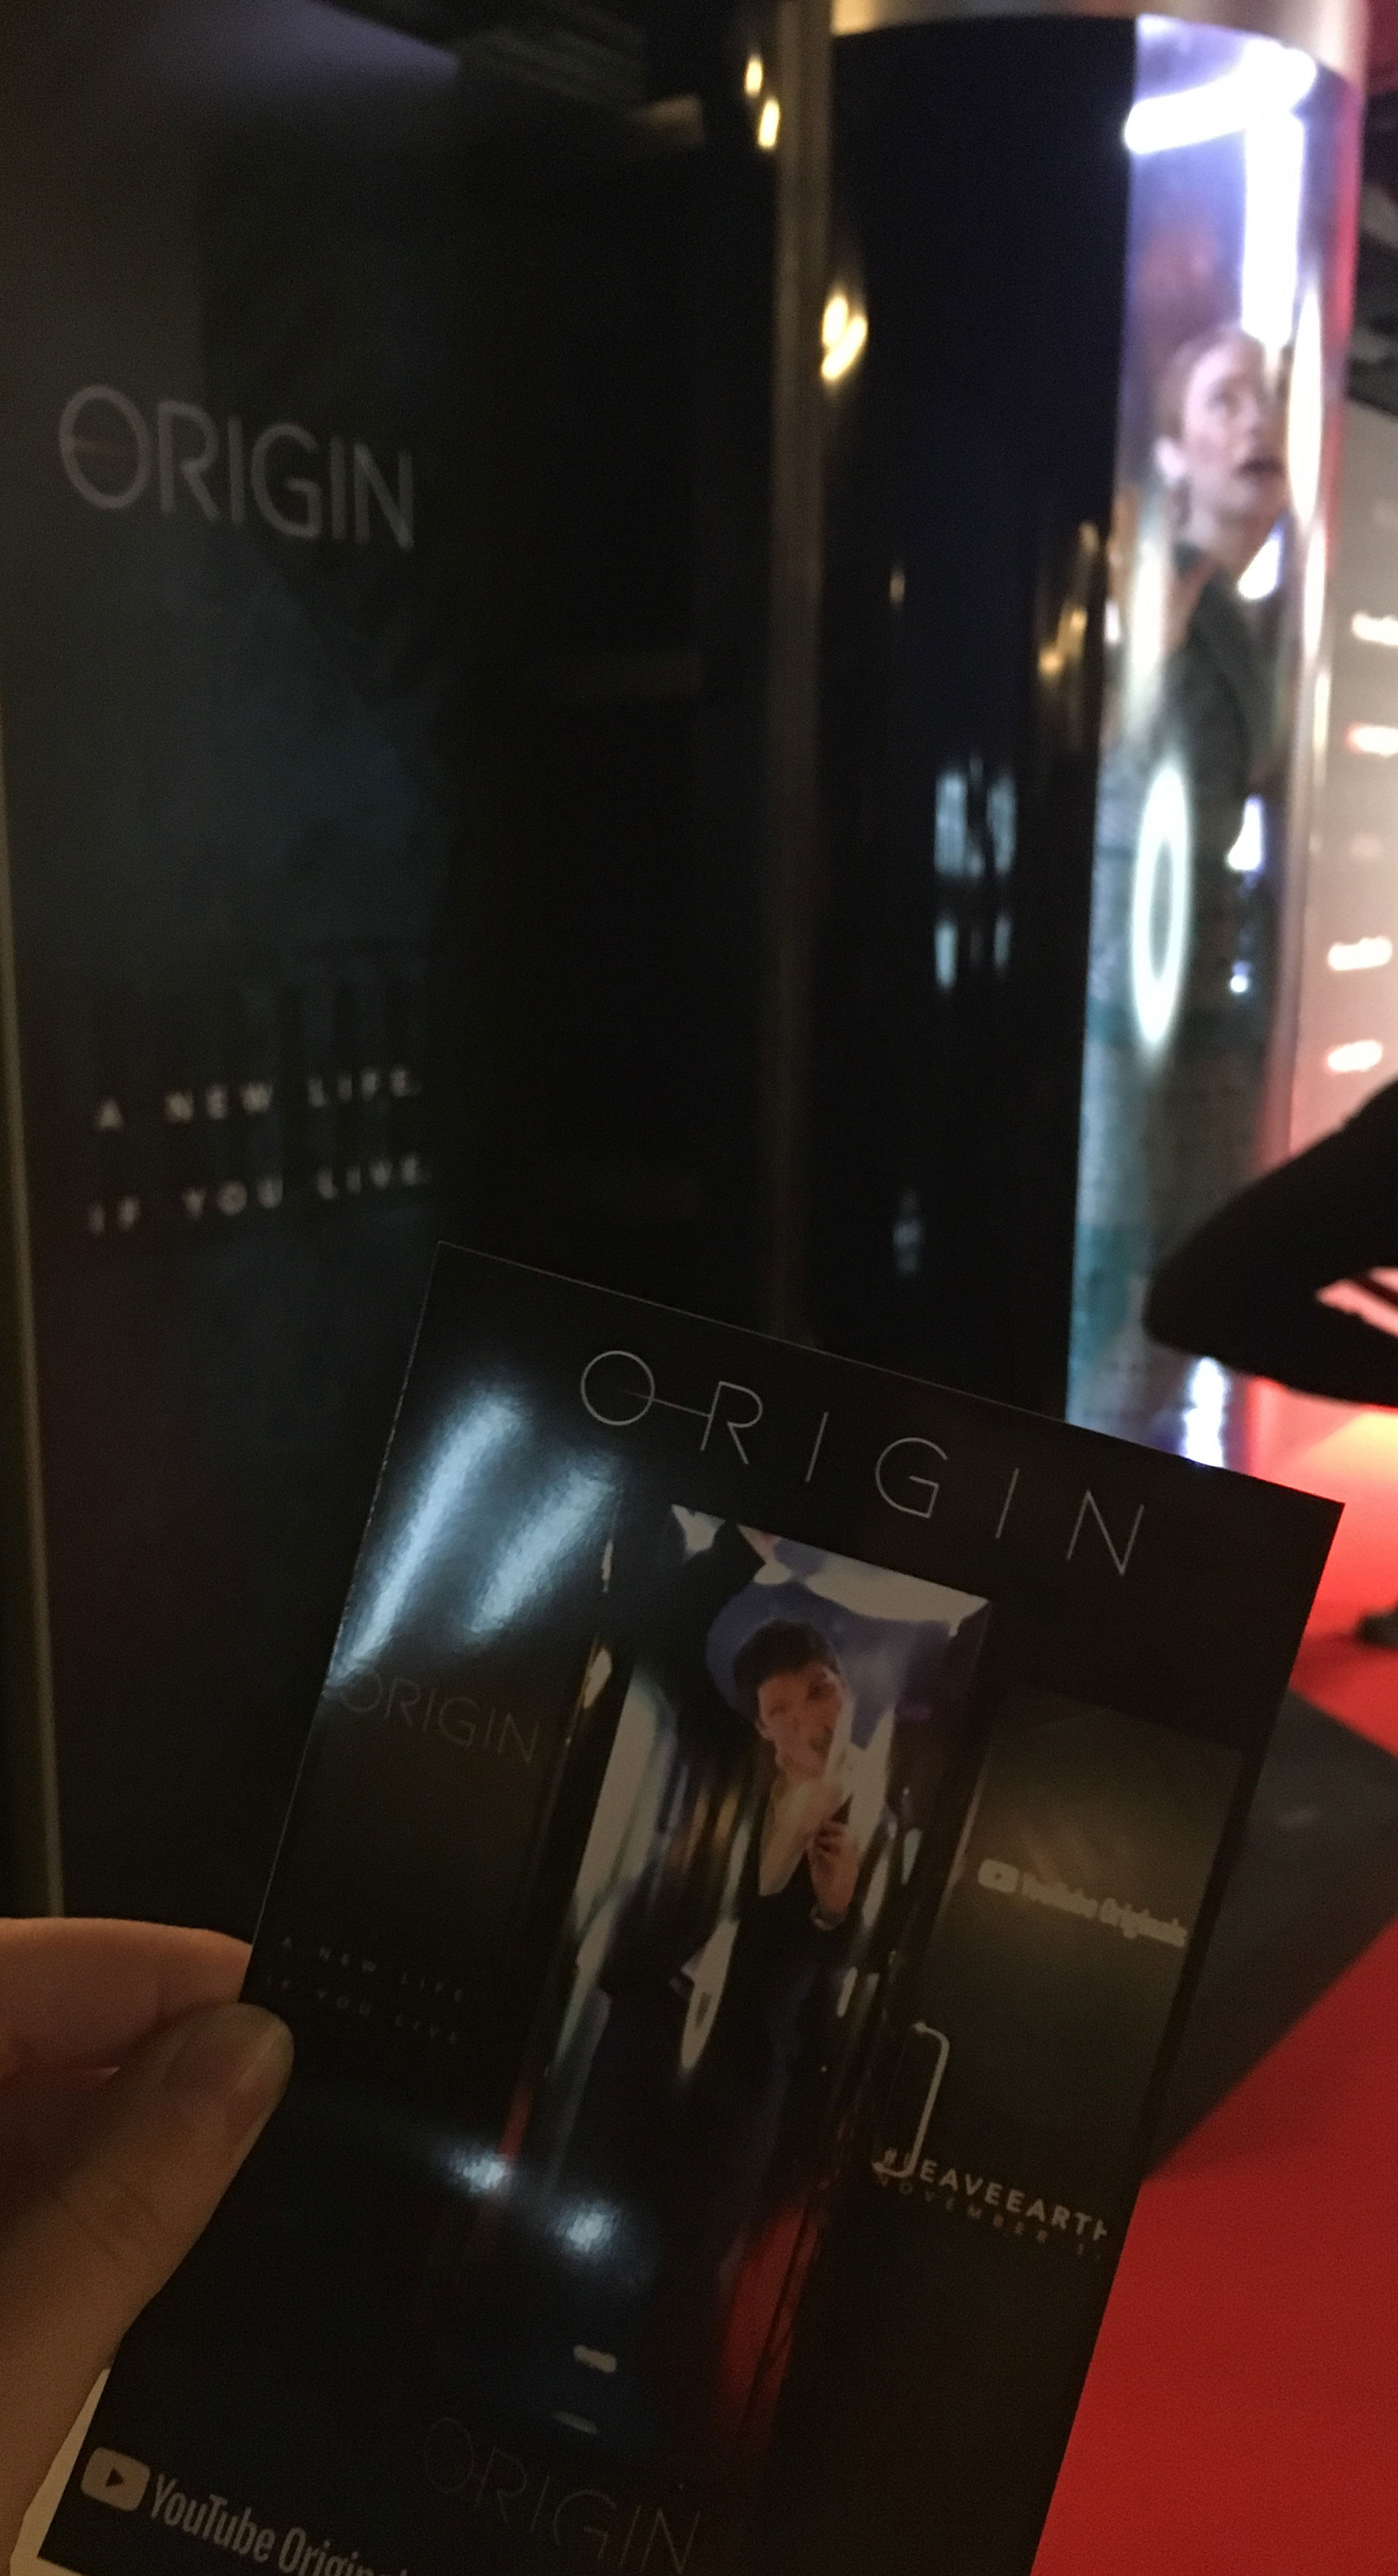 A poster for YouTube Originals series “Origin”